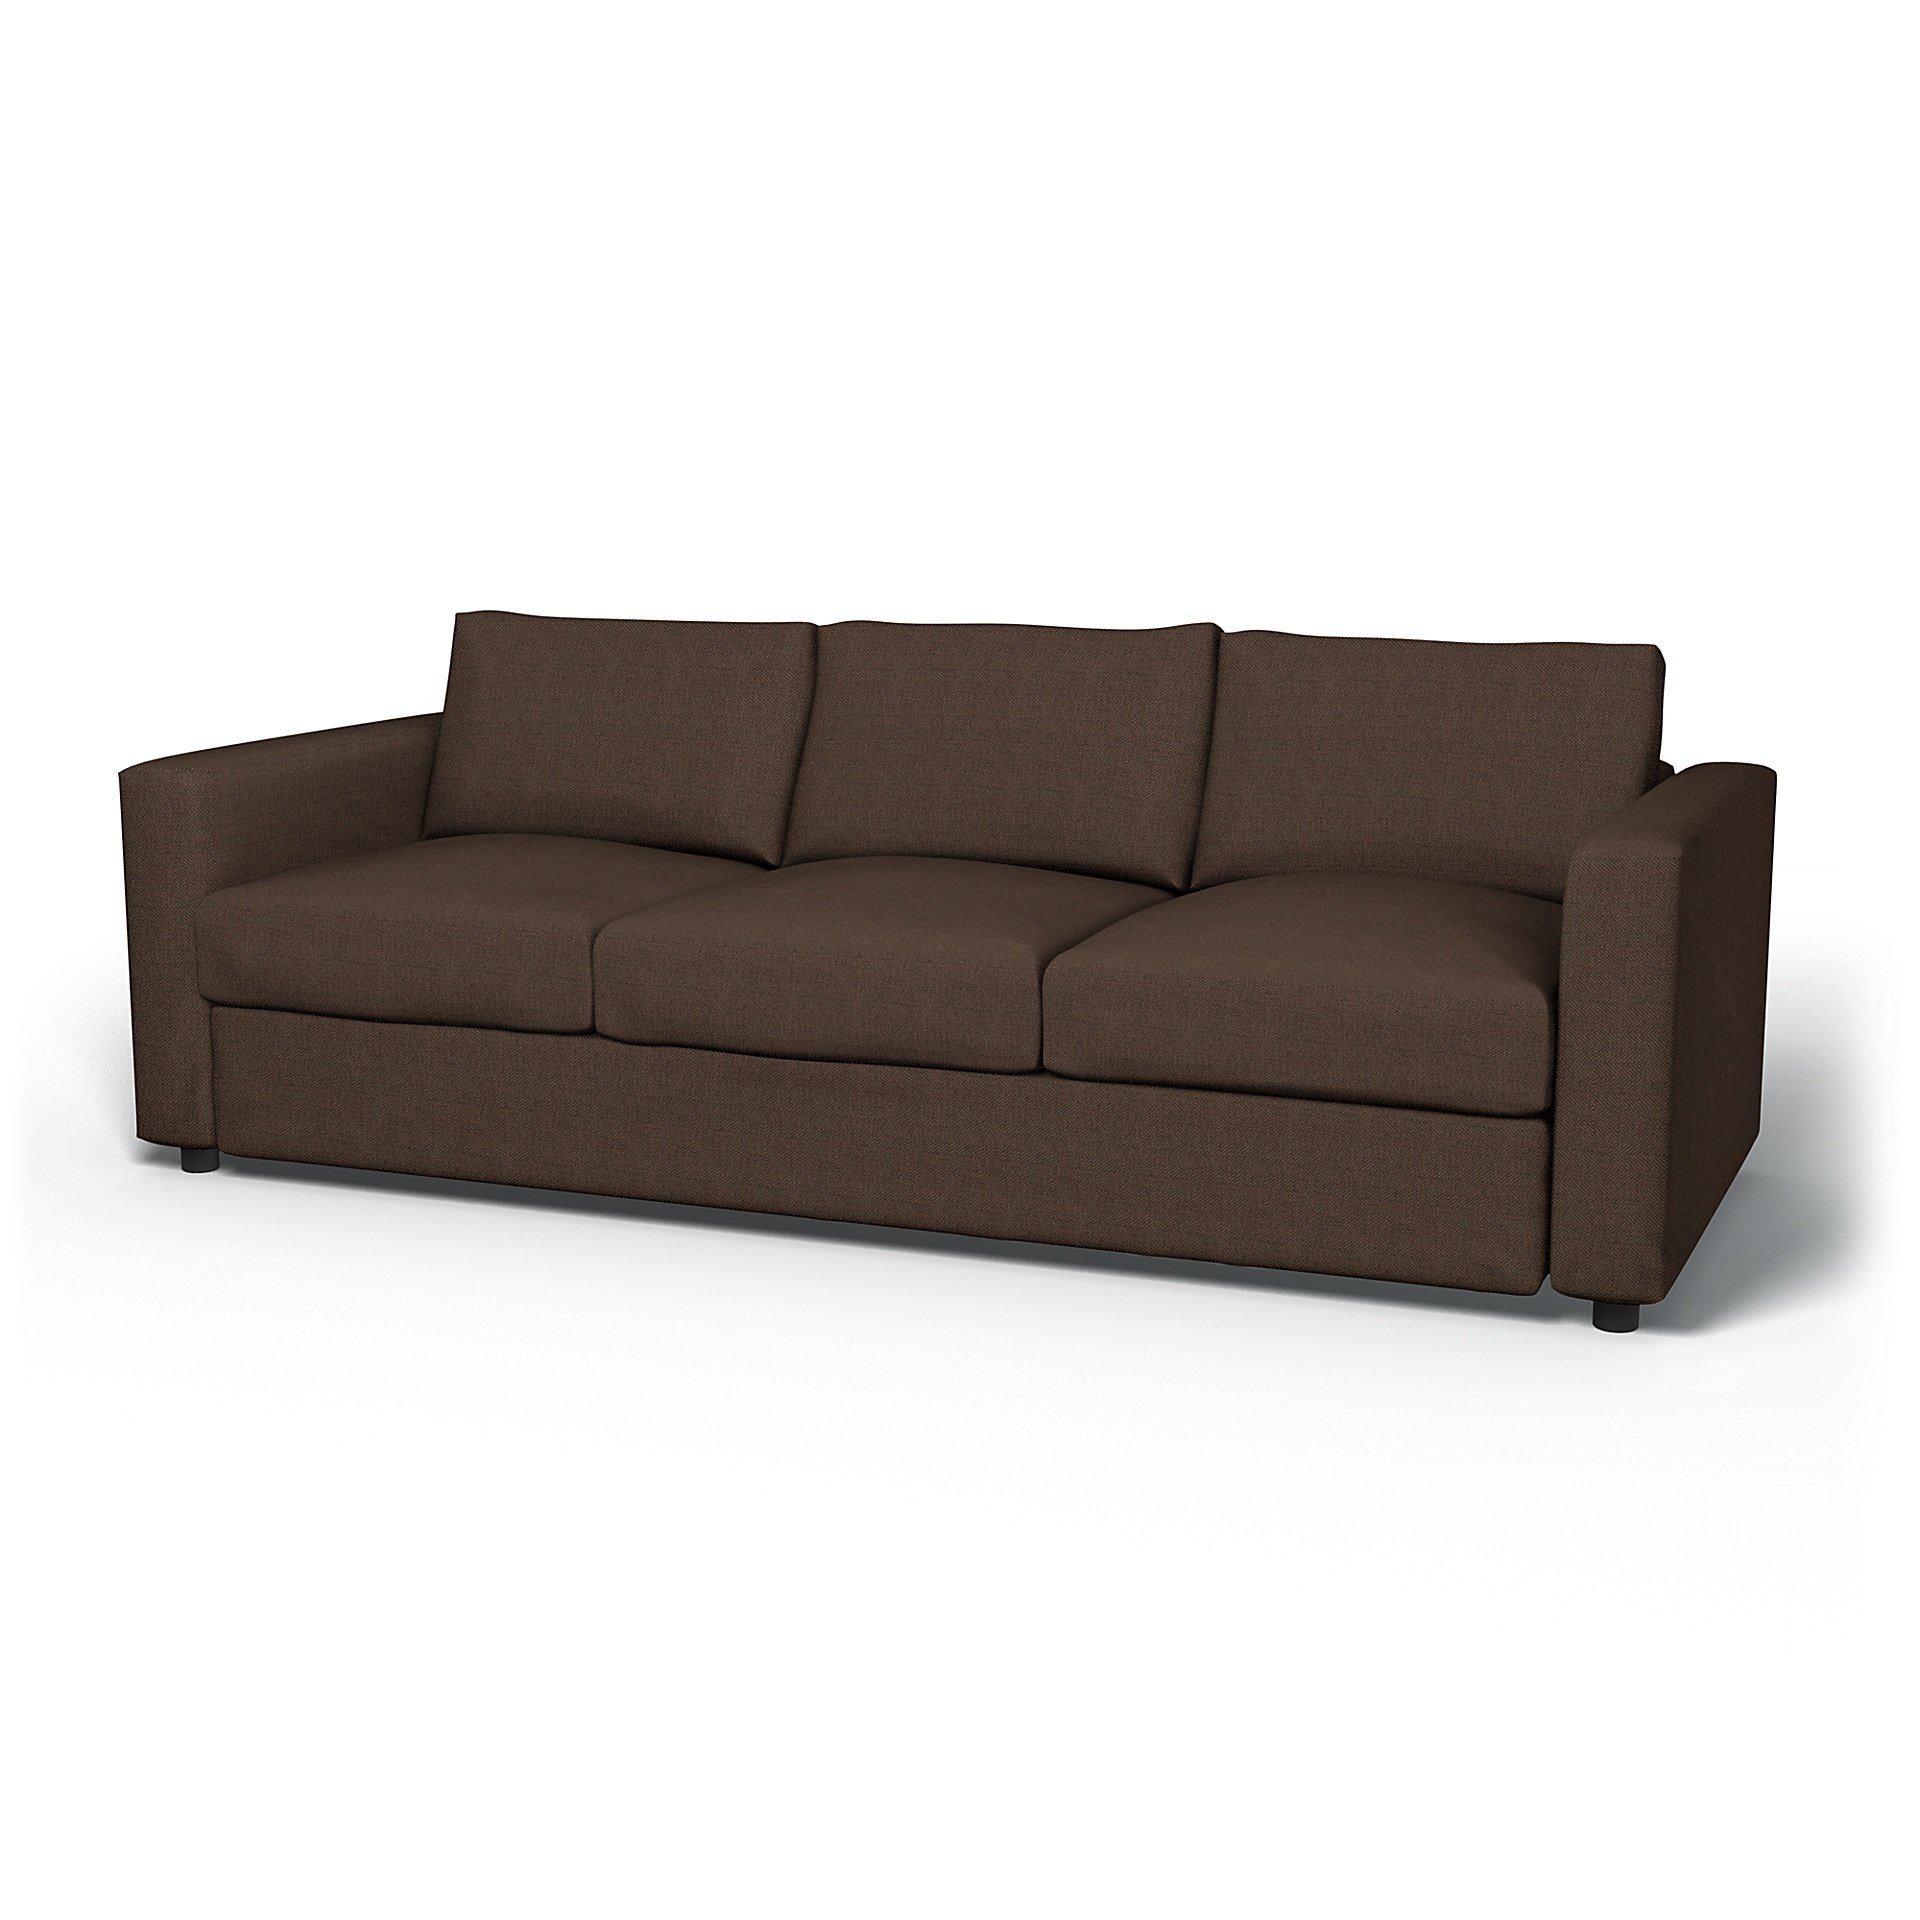 IKEA - Vimle 3 Seater Sofa Cover, Chocolate, Boucle & Texture - Bemz